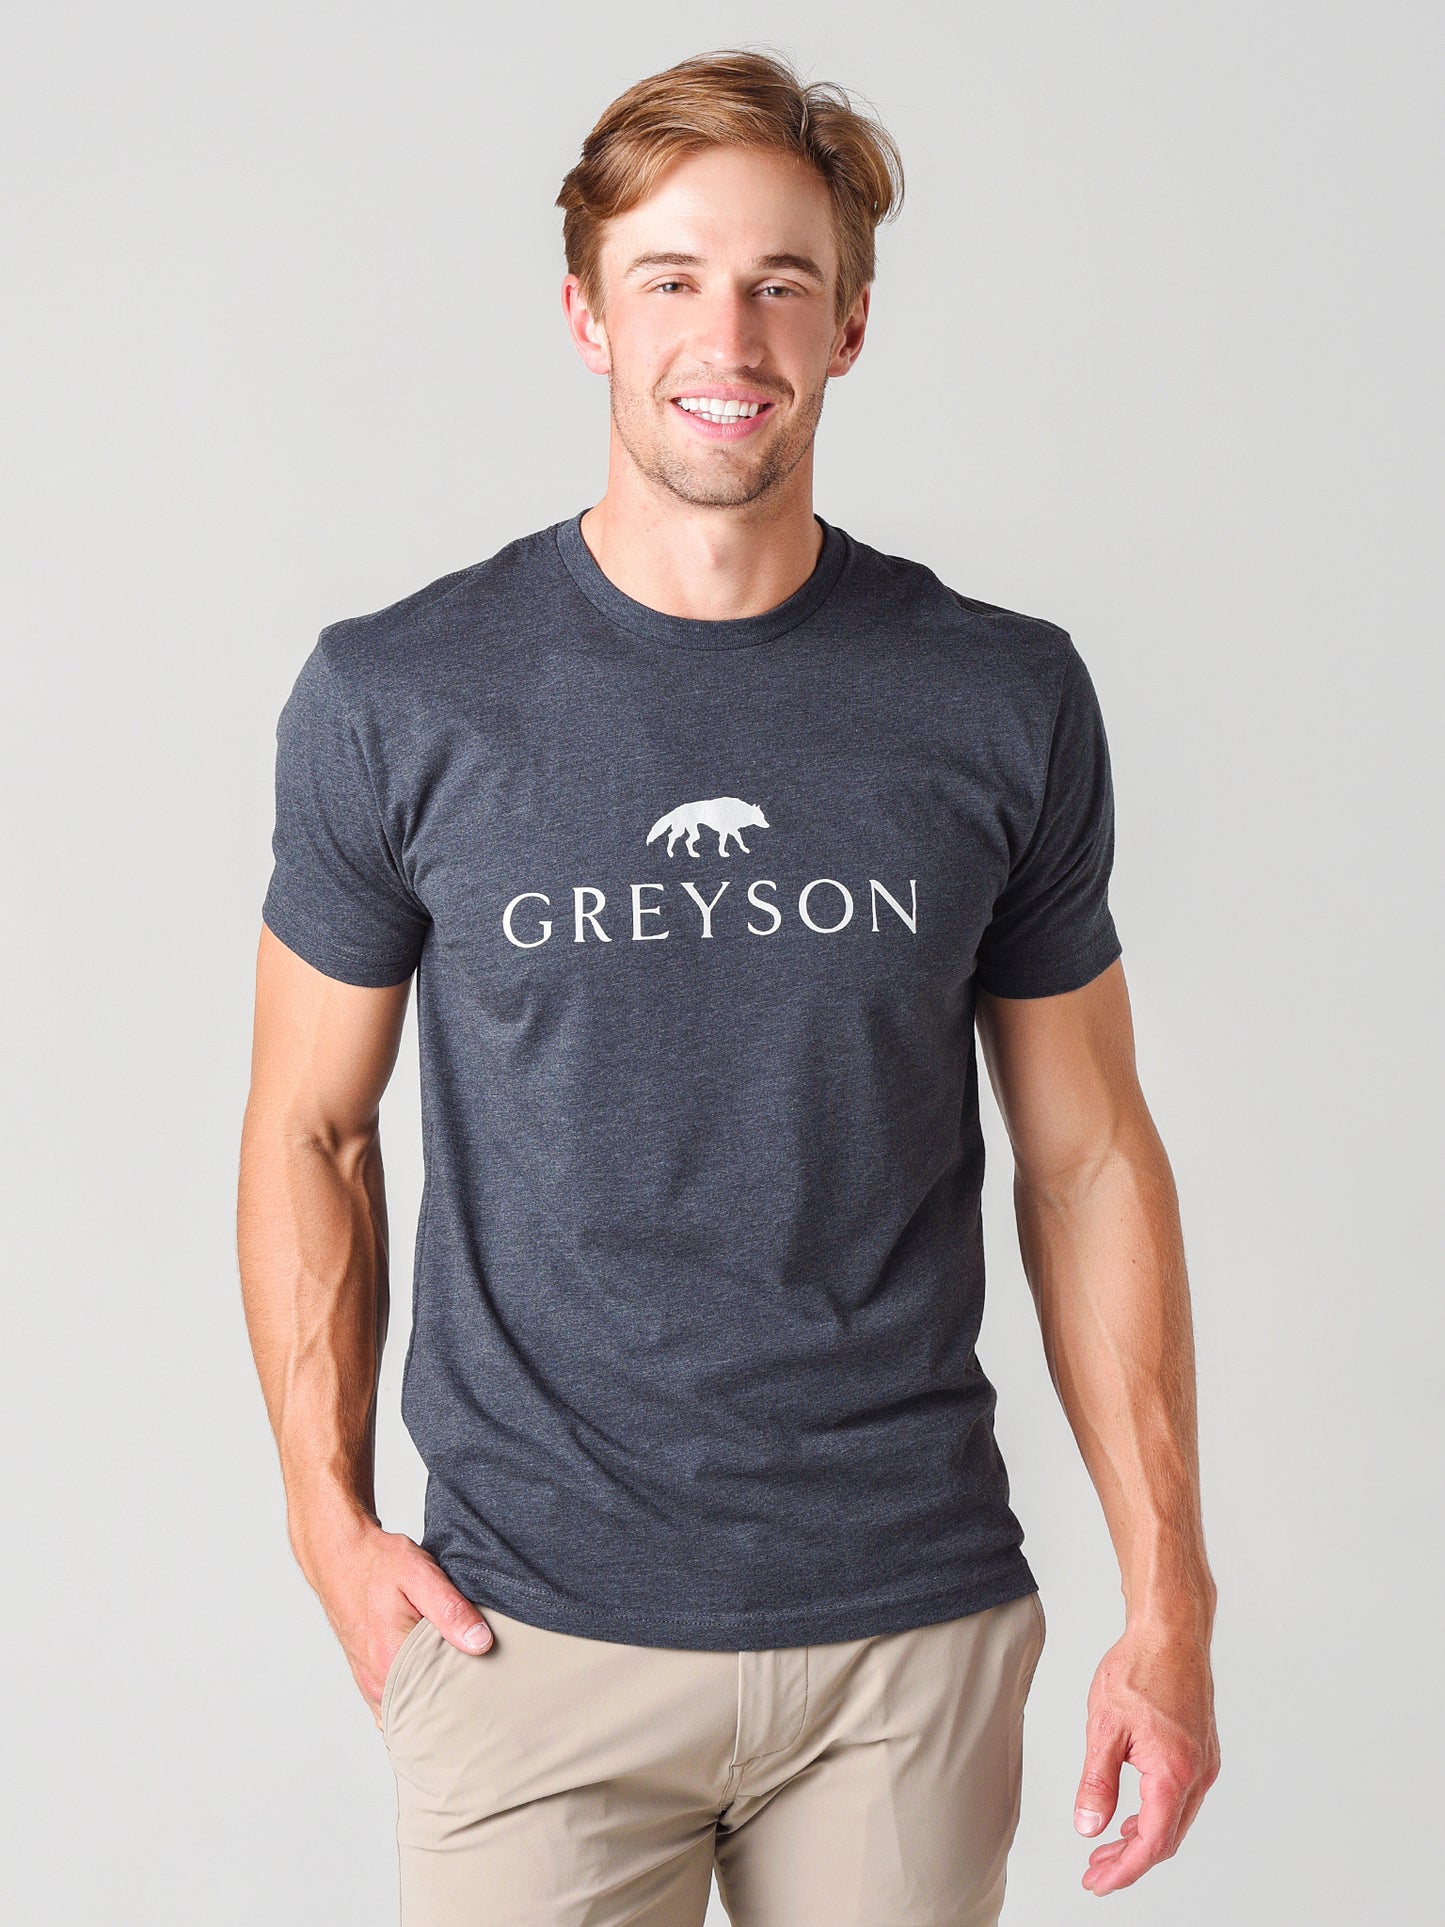 Greyson Men's Greyson Tee